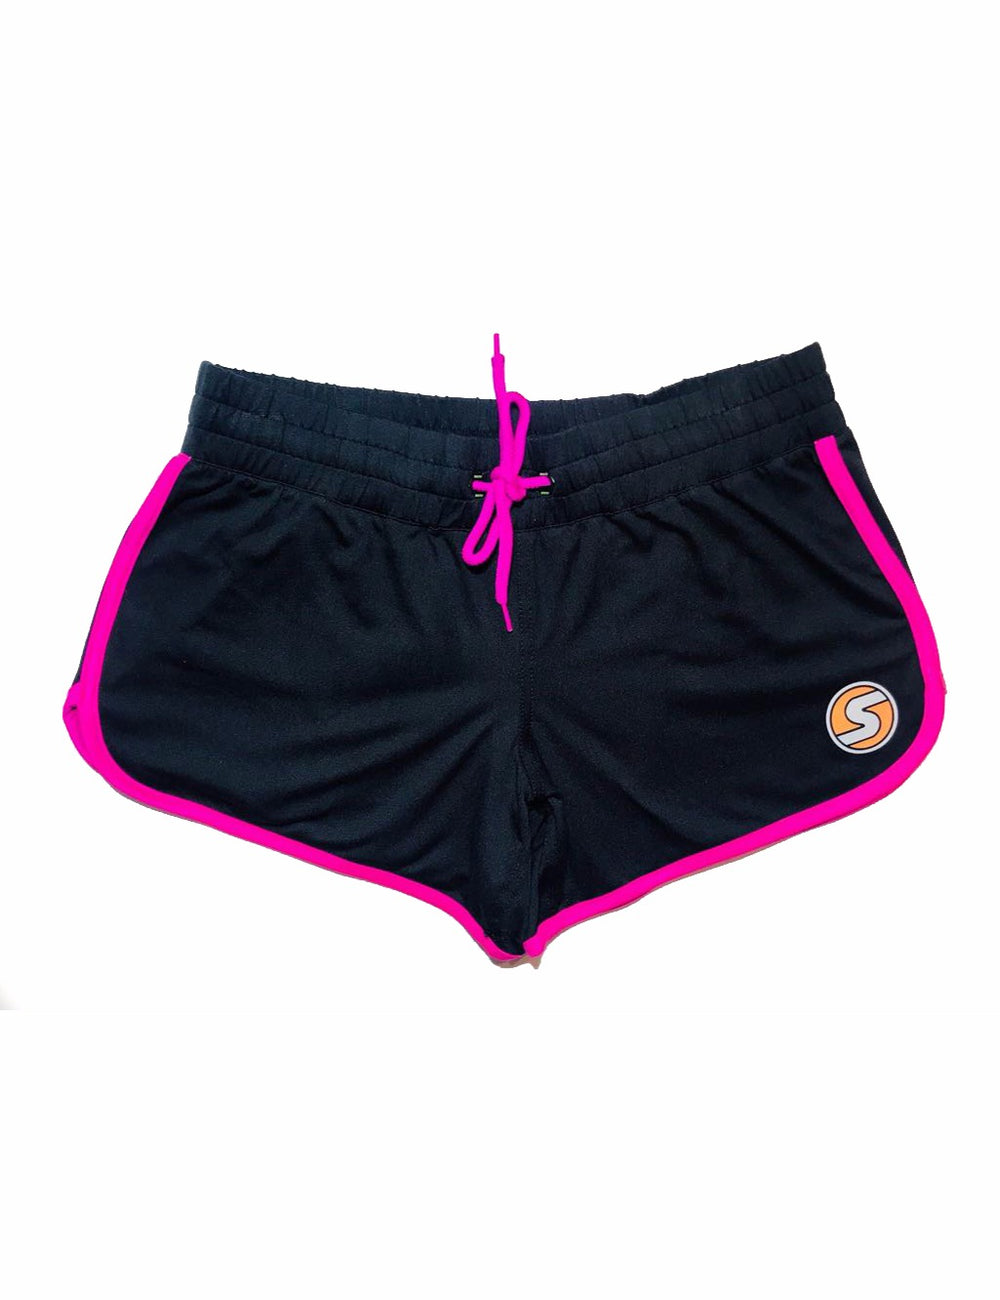 Sexy Brand Marissa Shorts Womens Black Hot Pink